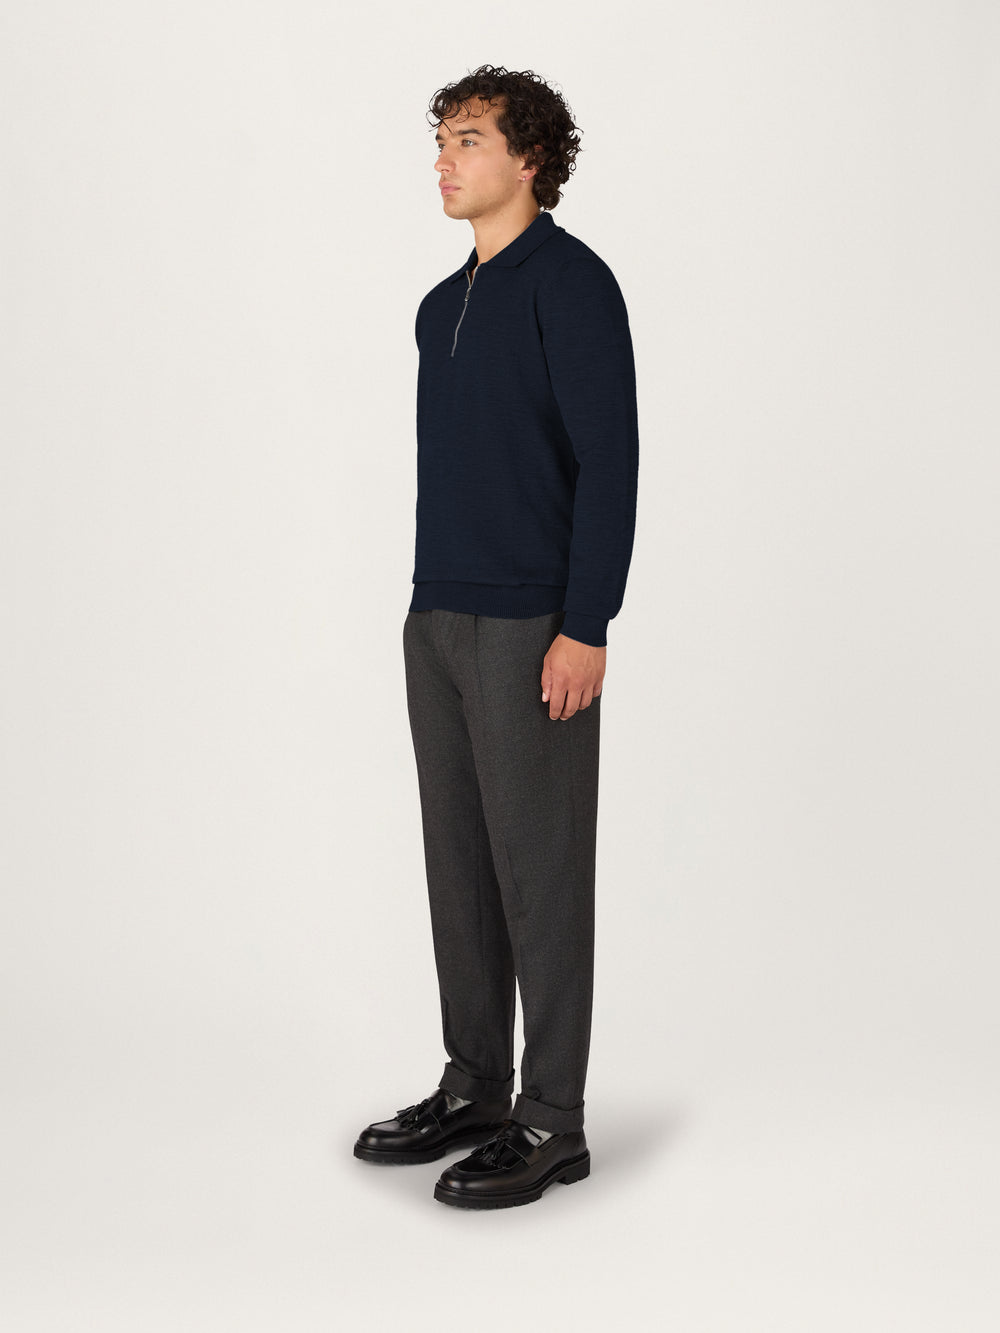 The Lightweight Easy Zip Sweater || Navy | Merino Wool